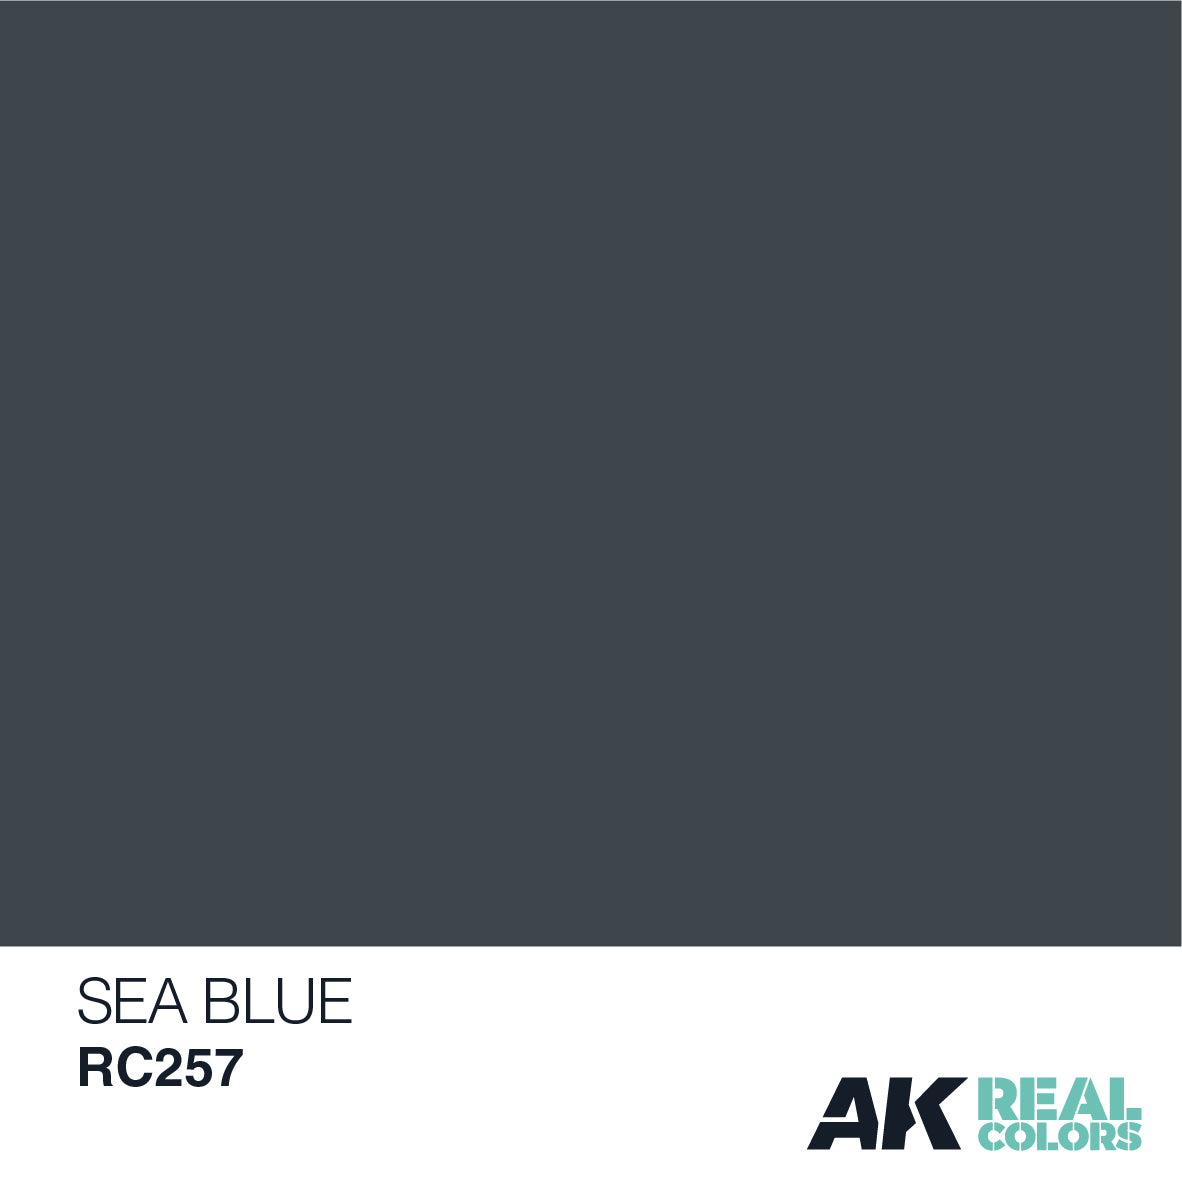 Sea Blue 10ml - Loaded Dice Barry Vale of Glamorgan CF64 3HD